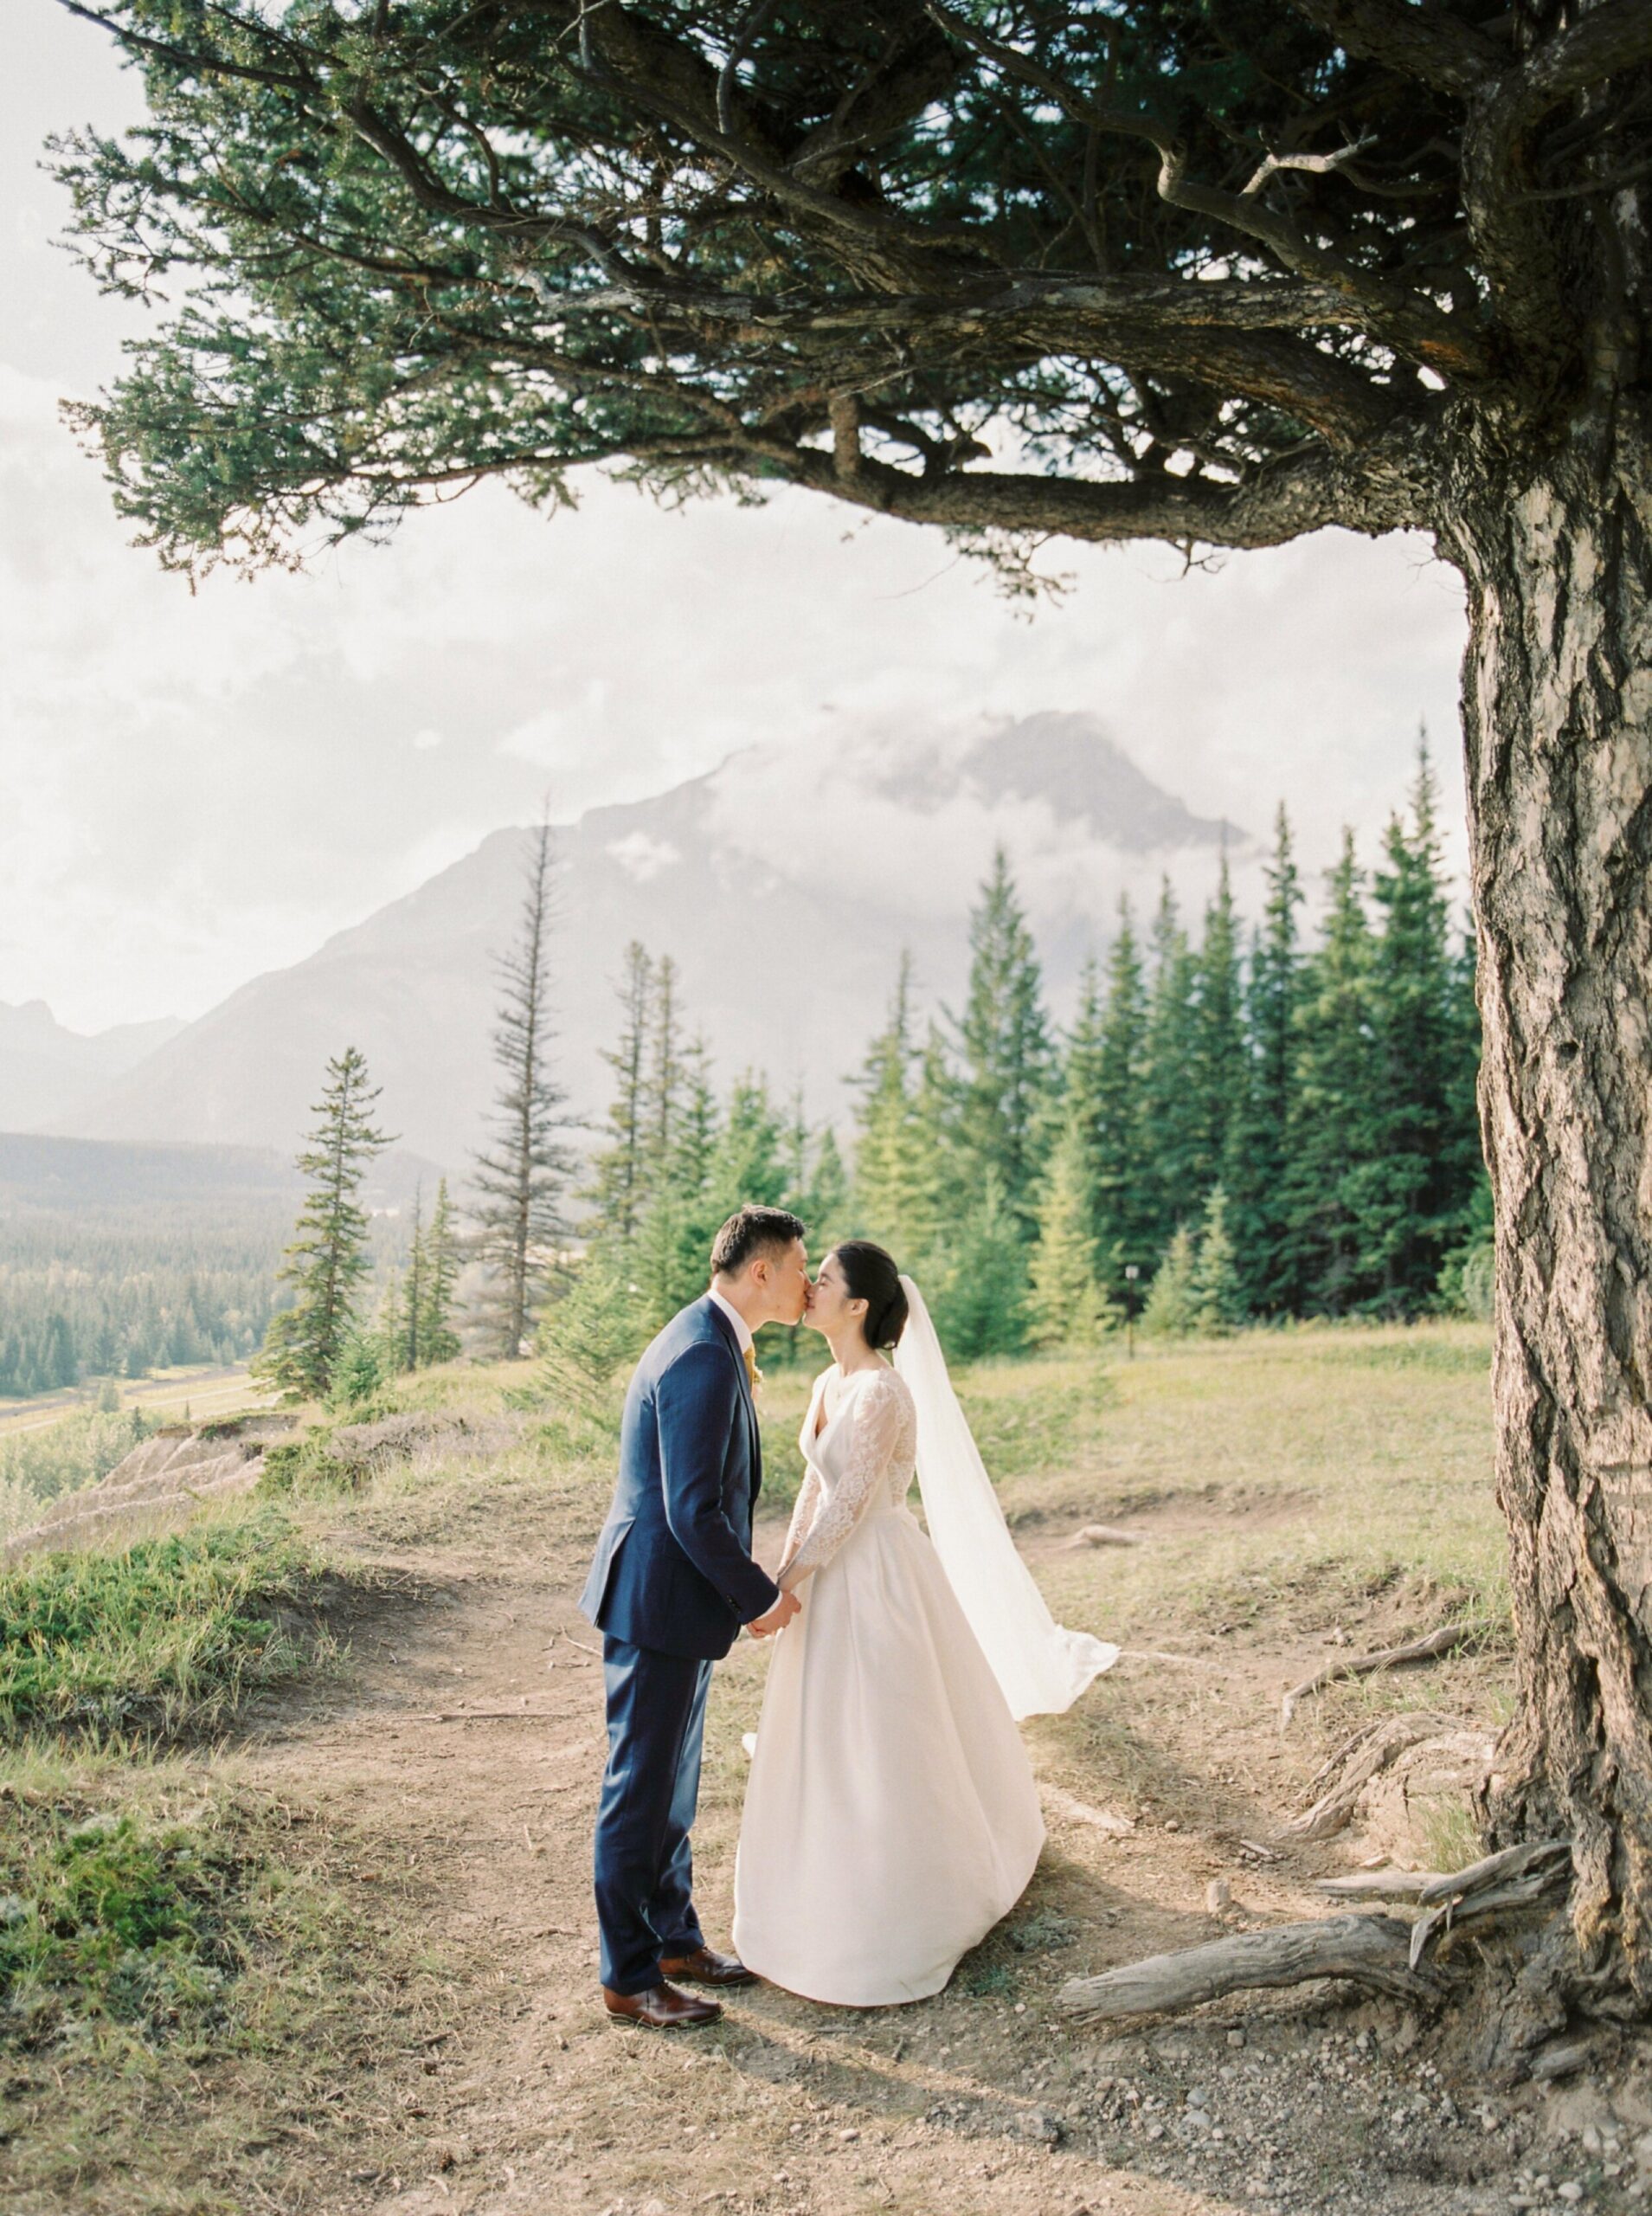  couples portrait pose ideas | Fairmont Banff Springs hotel wedding photographers | fine art film photography | portra 400 